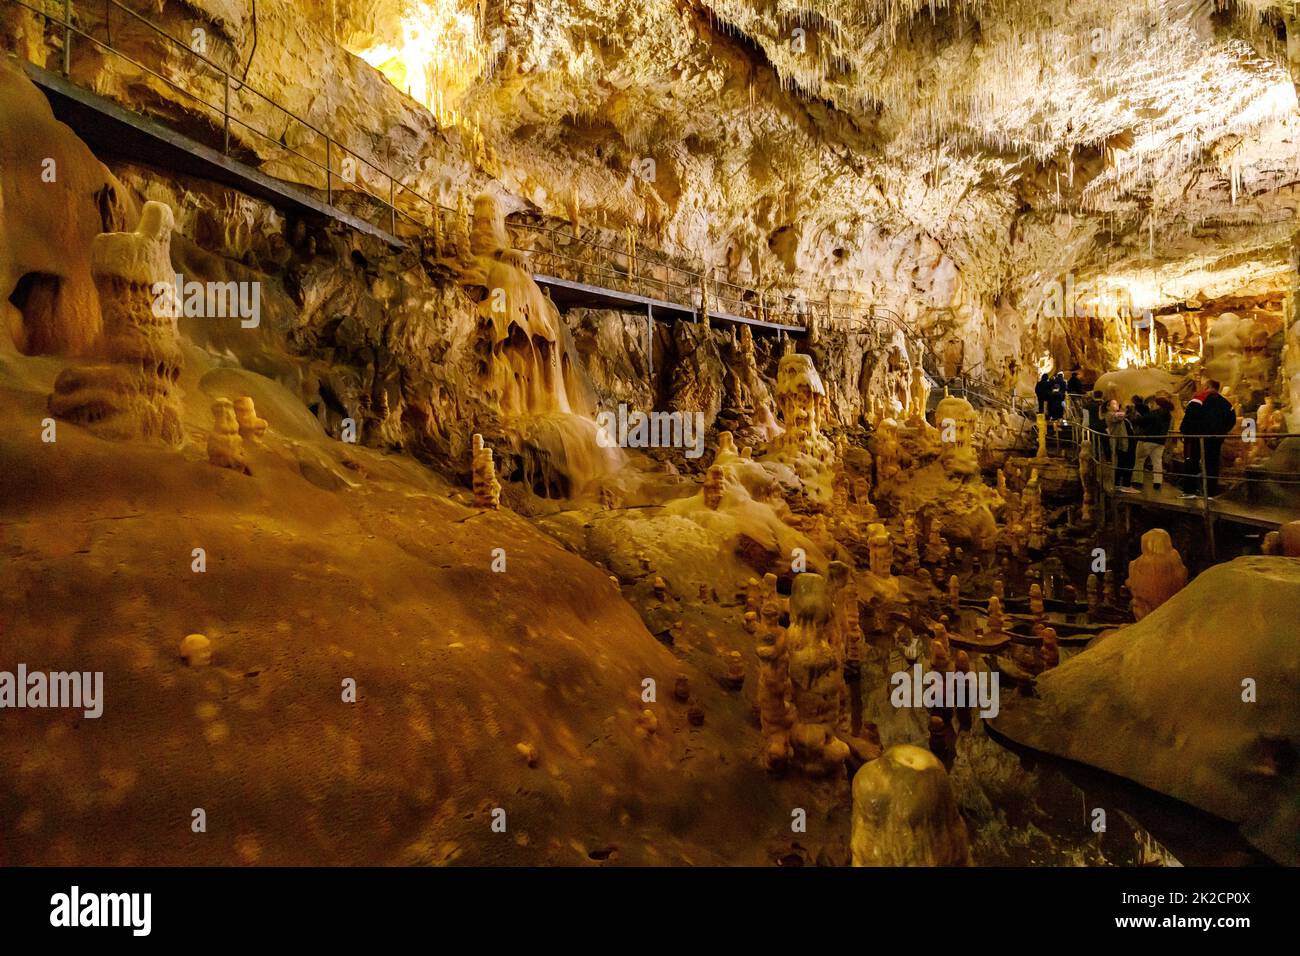 Die Bärenhöhle pestera ursilor bei chiscau in rumänien Stockfoto